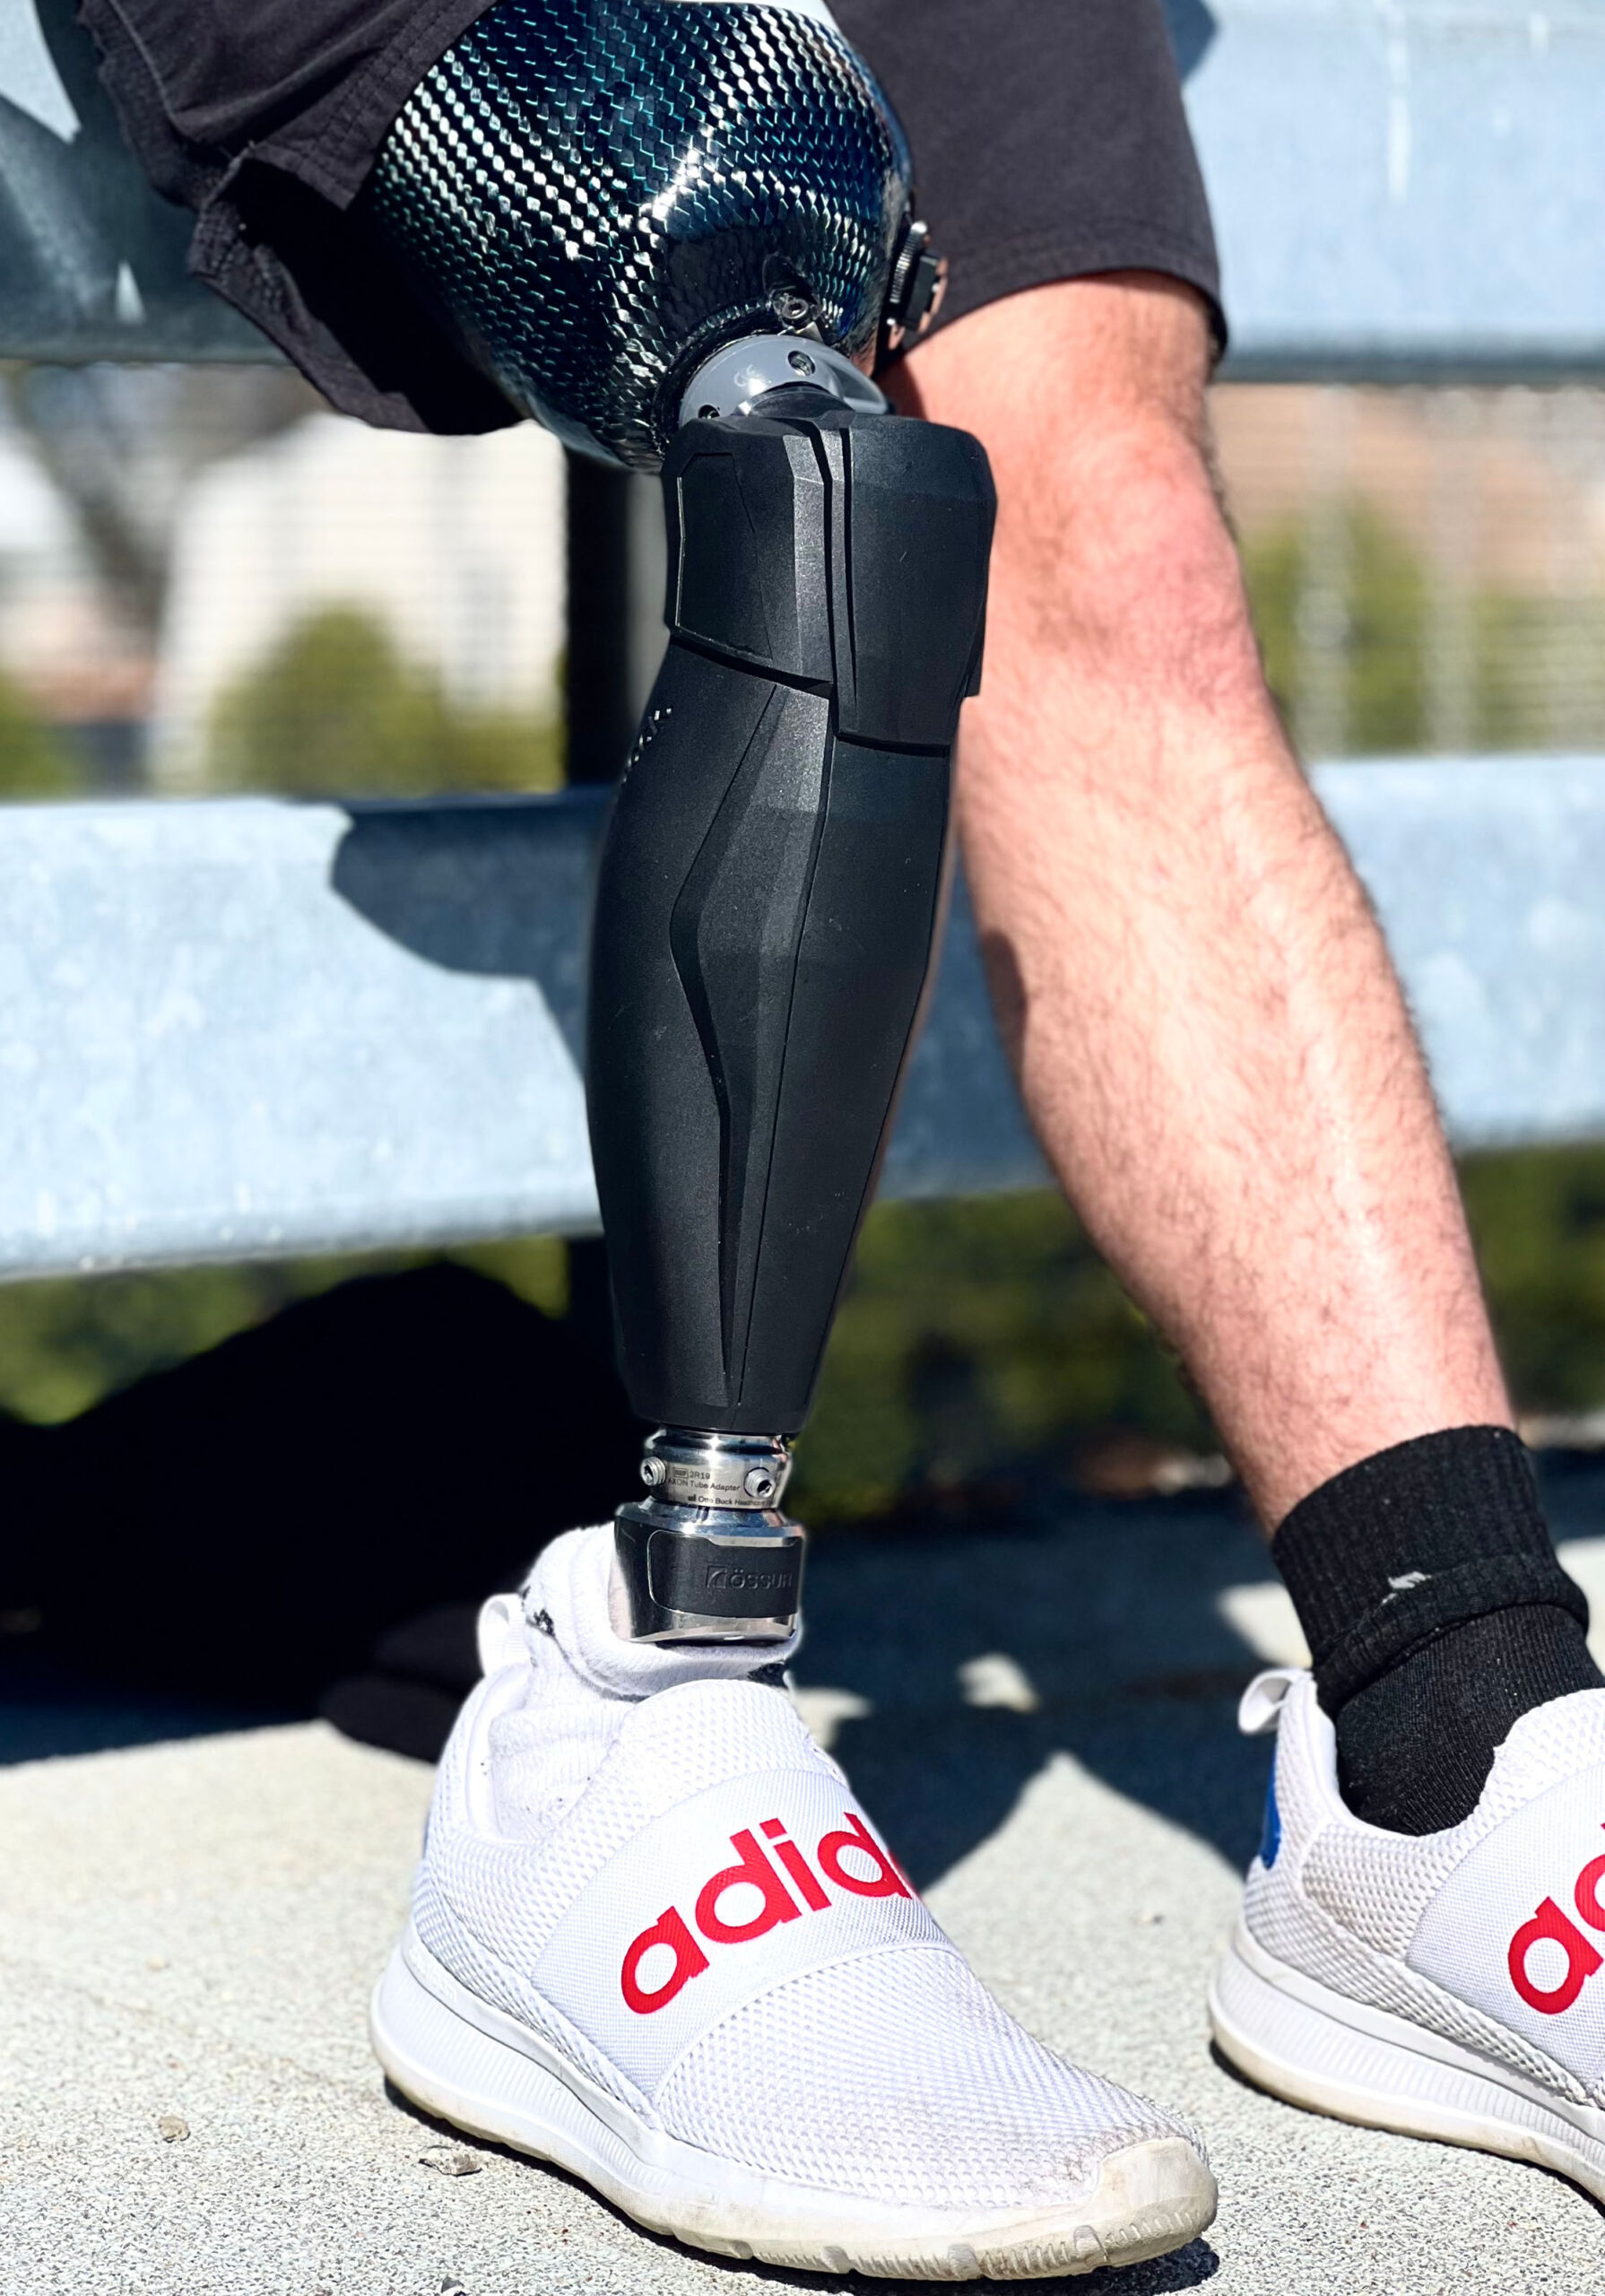 Above-knee prosthetics Leg. #prosthetic #prostheticleg #amputee #limbloss